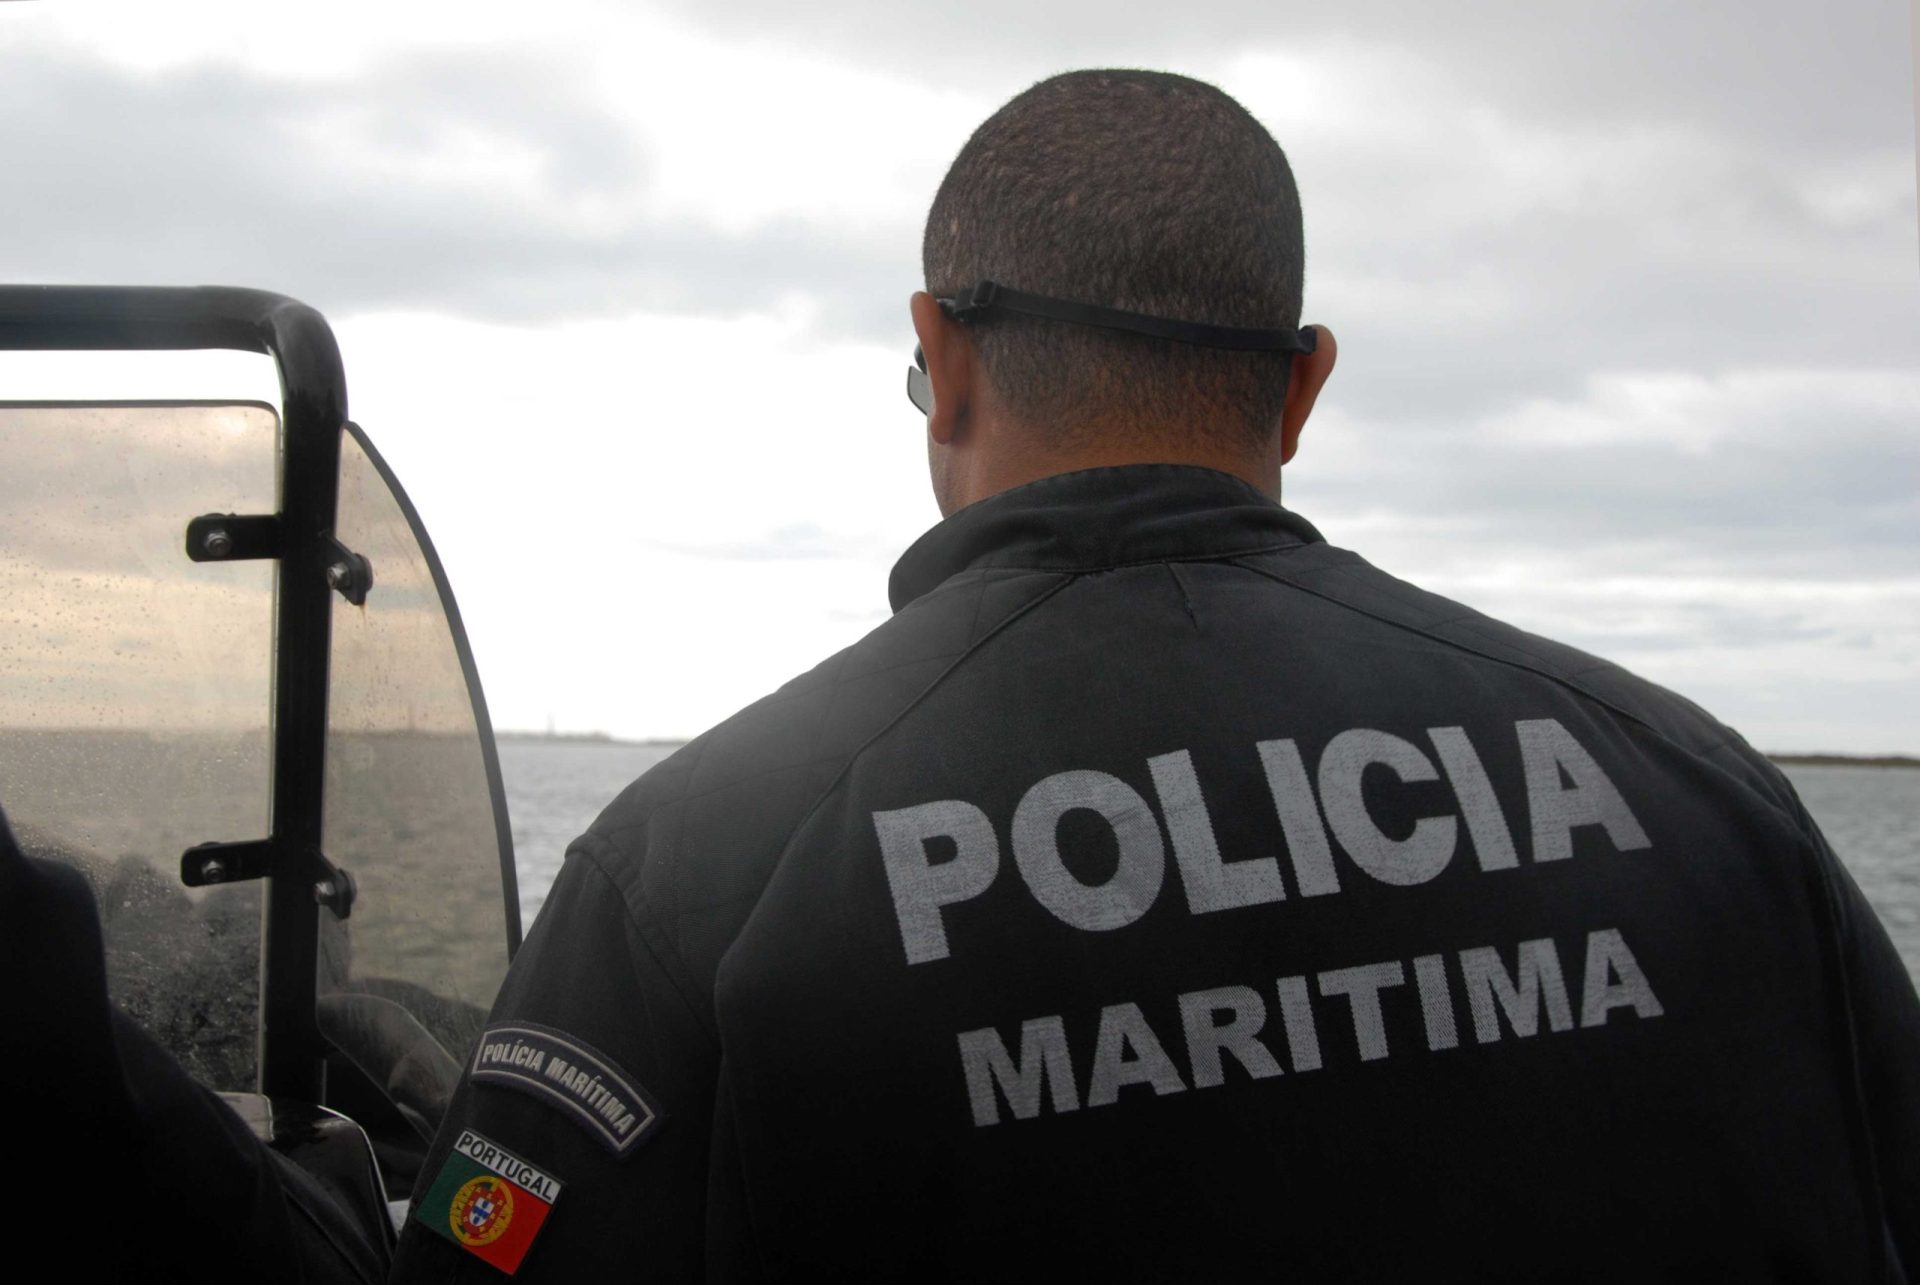 Governo prevê aumentar efetivo da Polícia Marítima até 2021